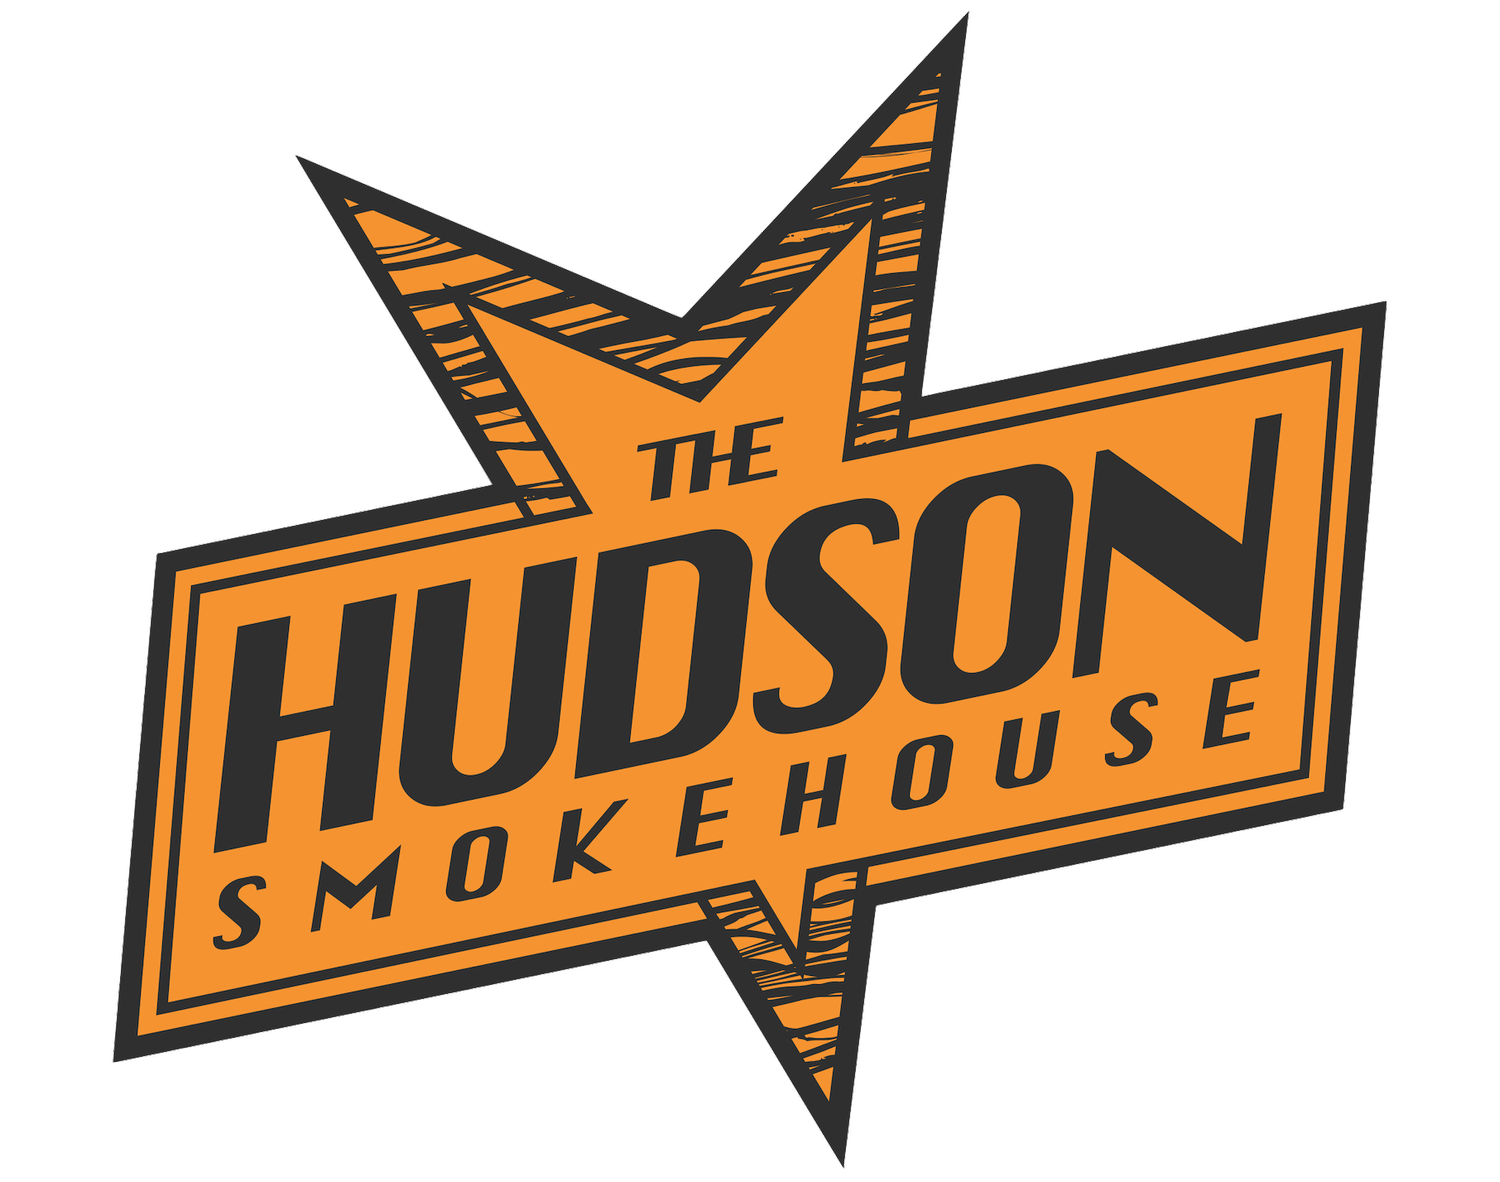 Hudson 218 - Smokehouse restaurant, cafe and bar in Ironton, Crosby, Cuyuna, MN